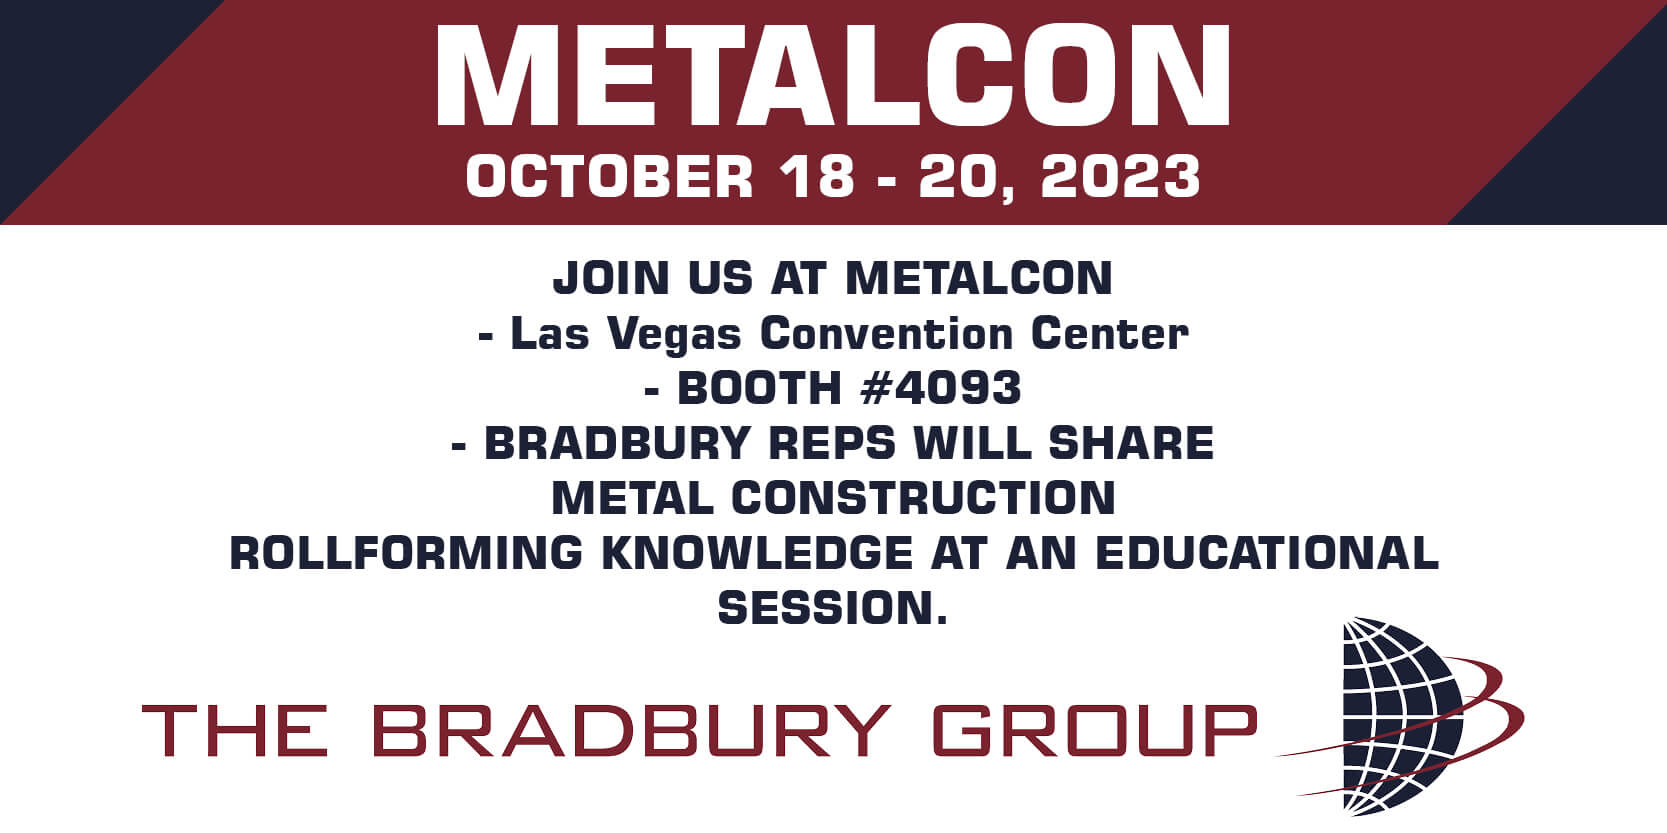 Metalcon 2023 Bradbury